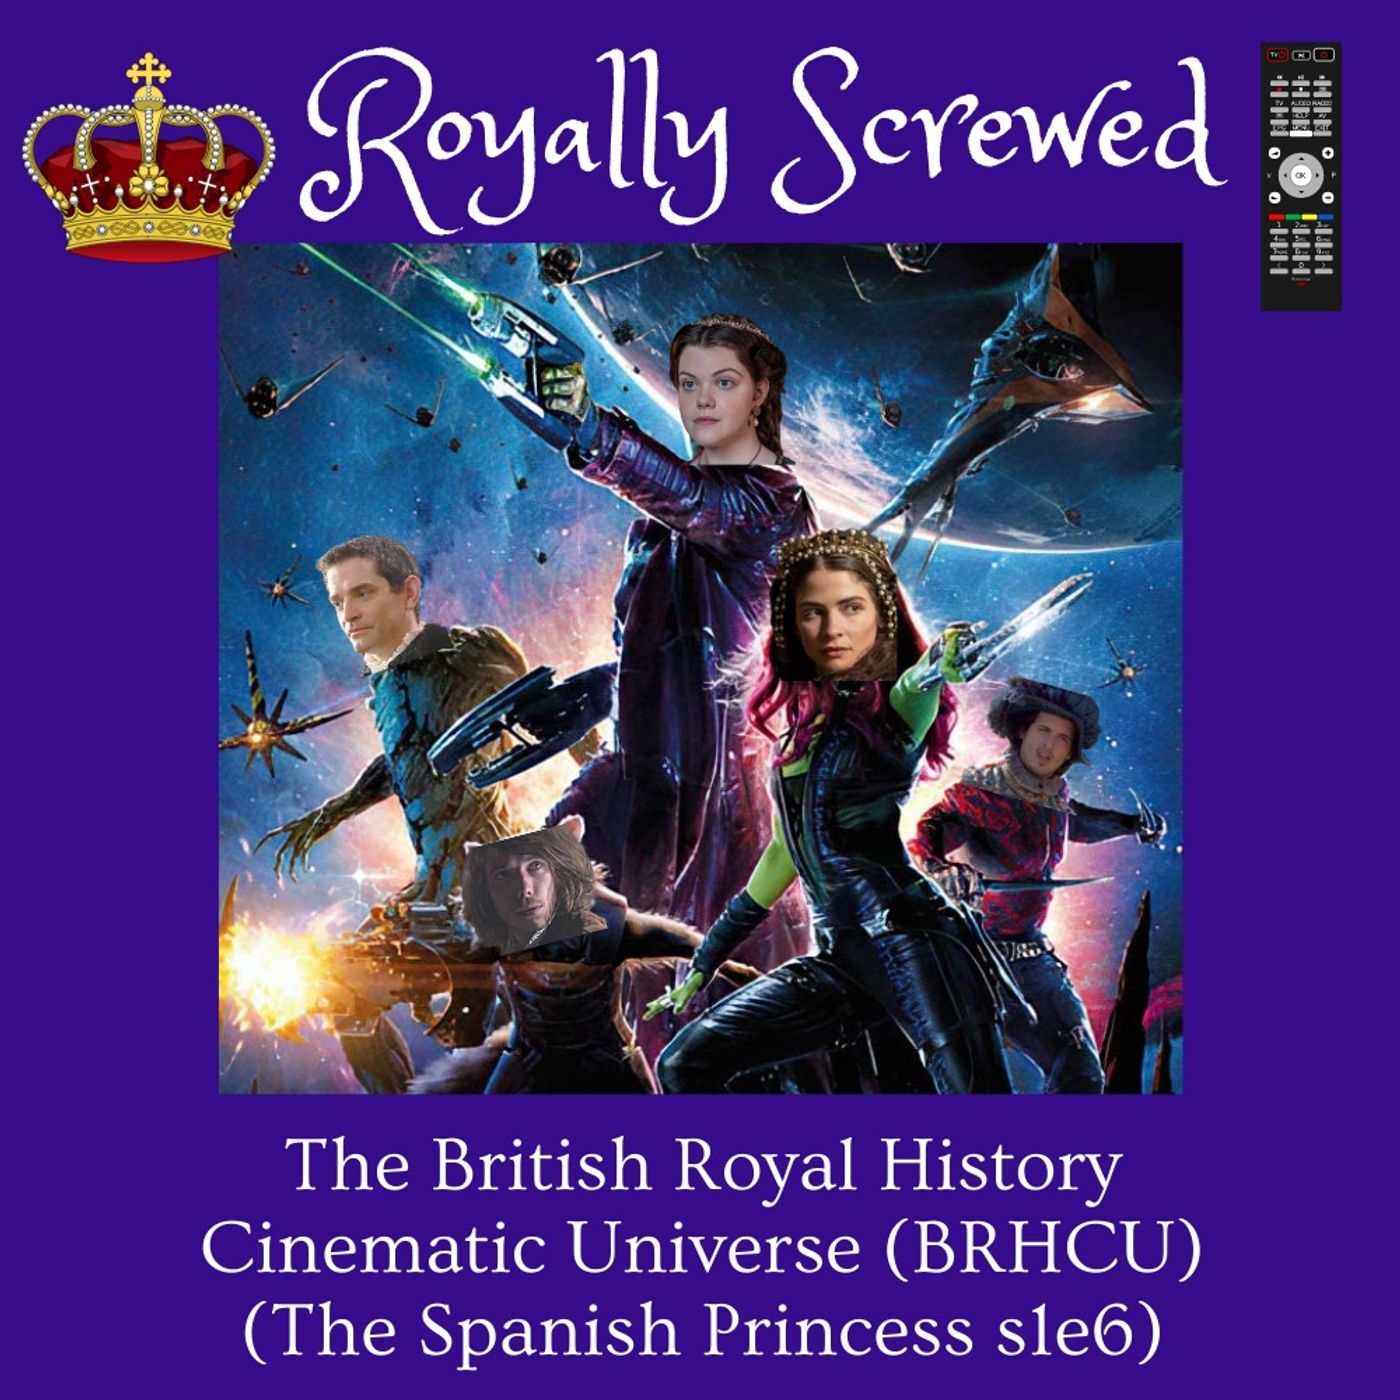 The British Royal History Cinematic Universe (BRHCU) (The Spanish Princess s1e6)